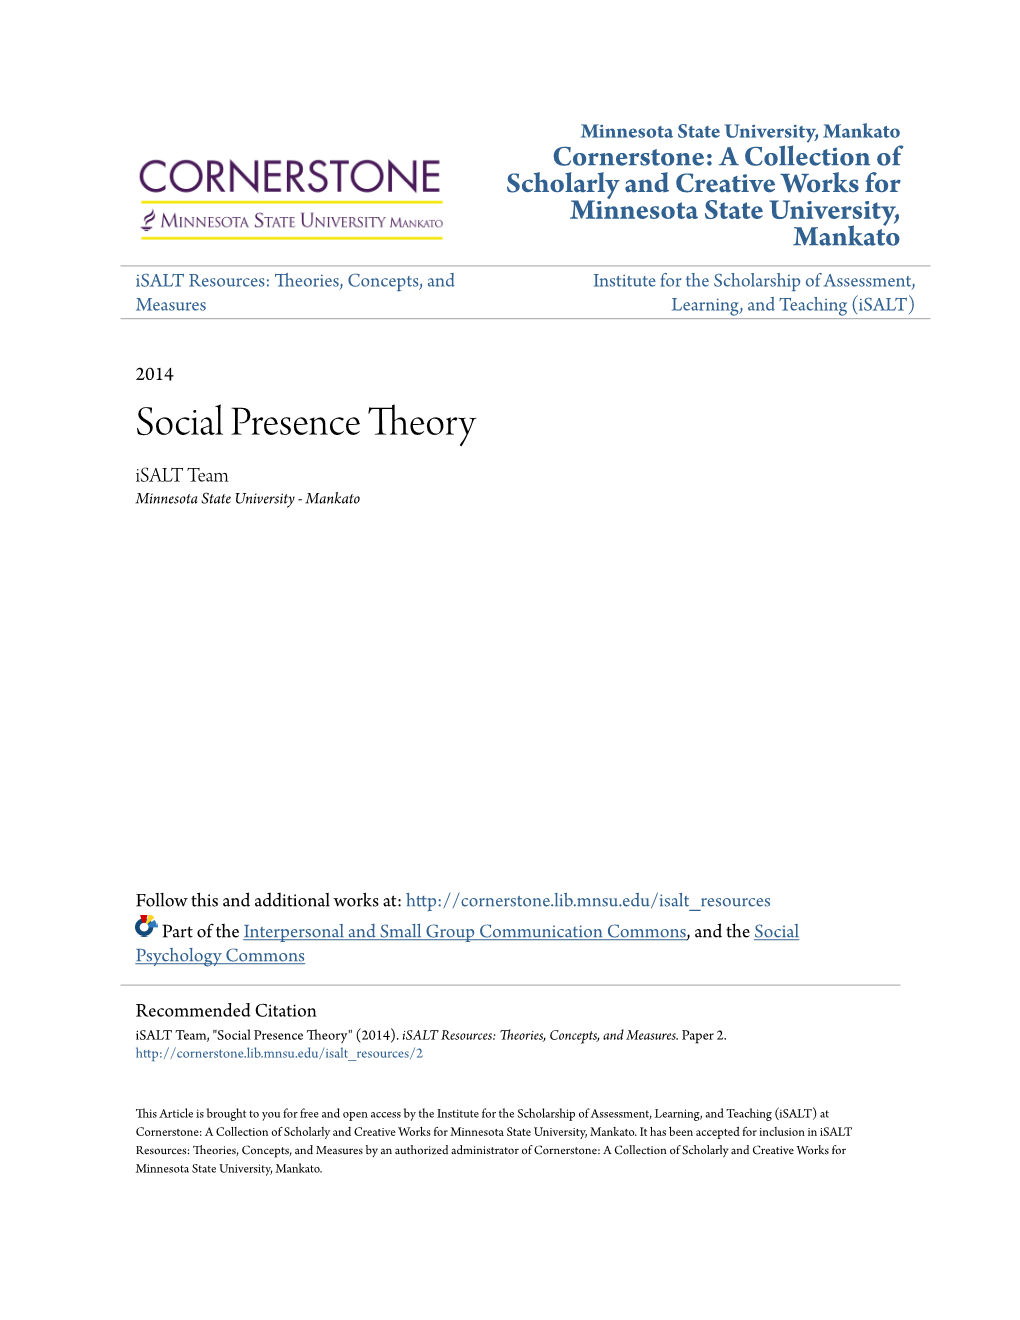 Social Presence Theory Isalt Team Minnesota State University - Mankato